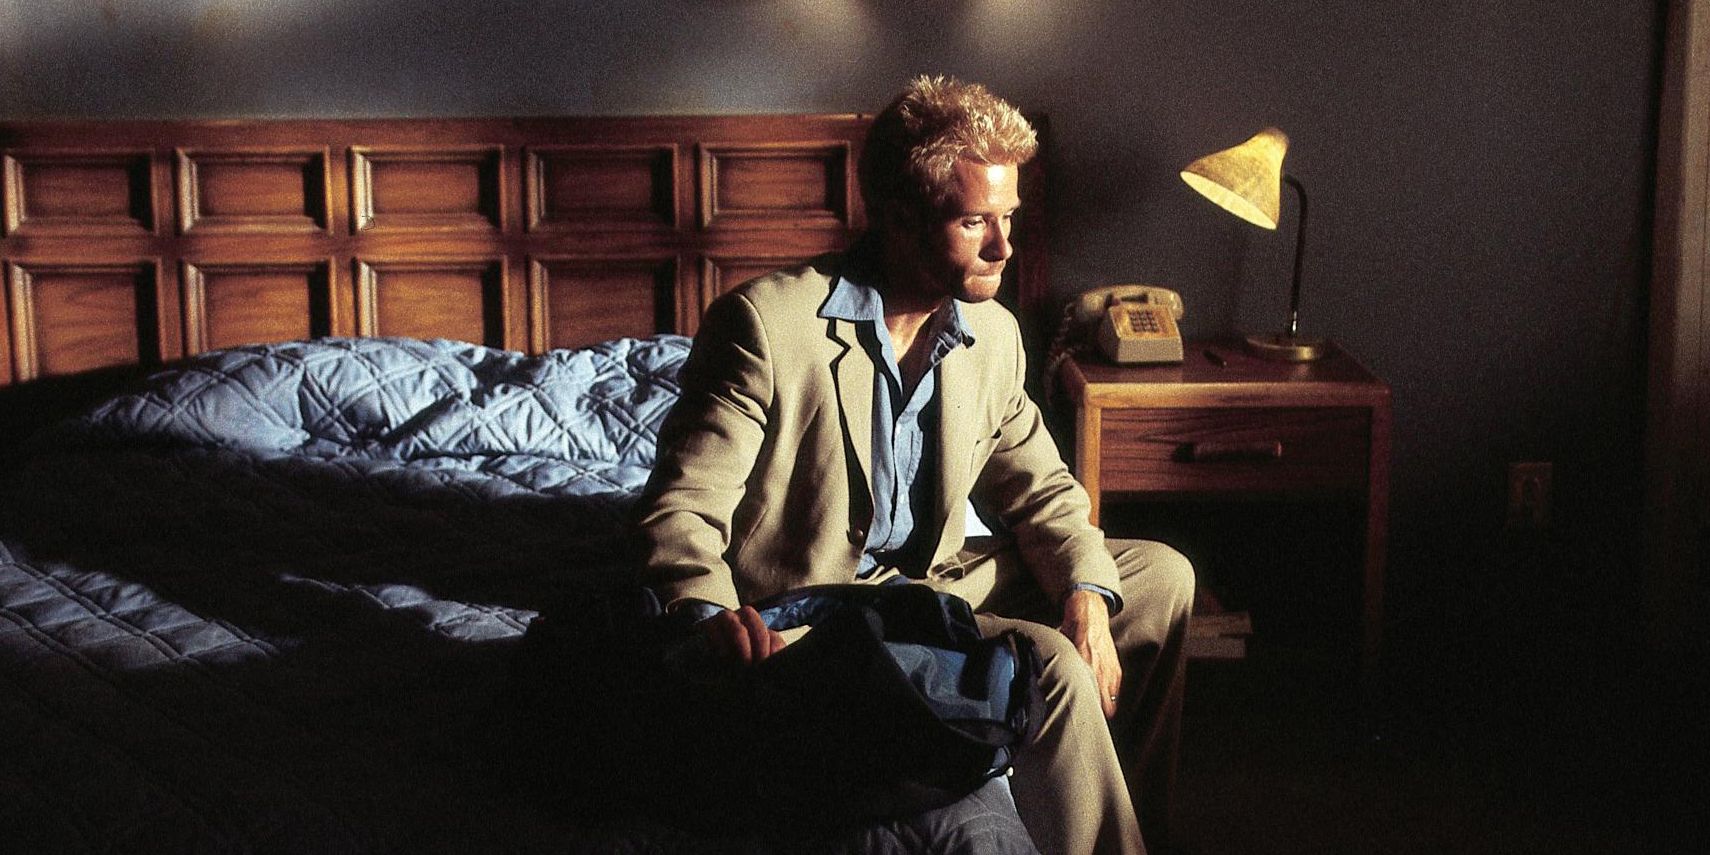 Memento - 2000 Christopher Nolan film - featuring Guy Pearce